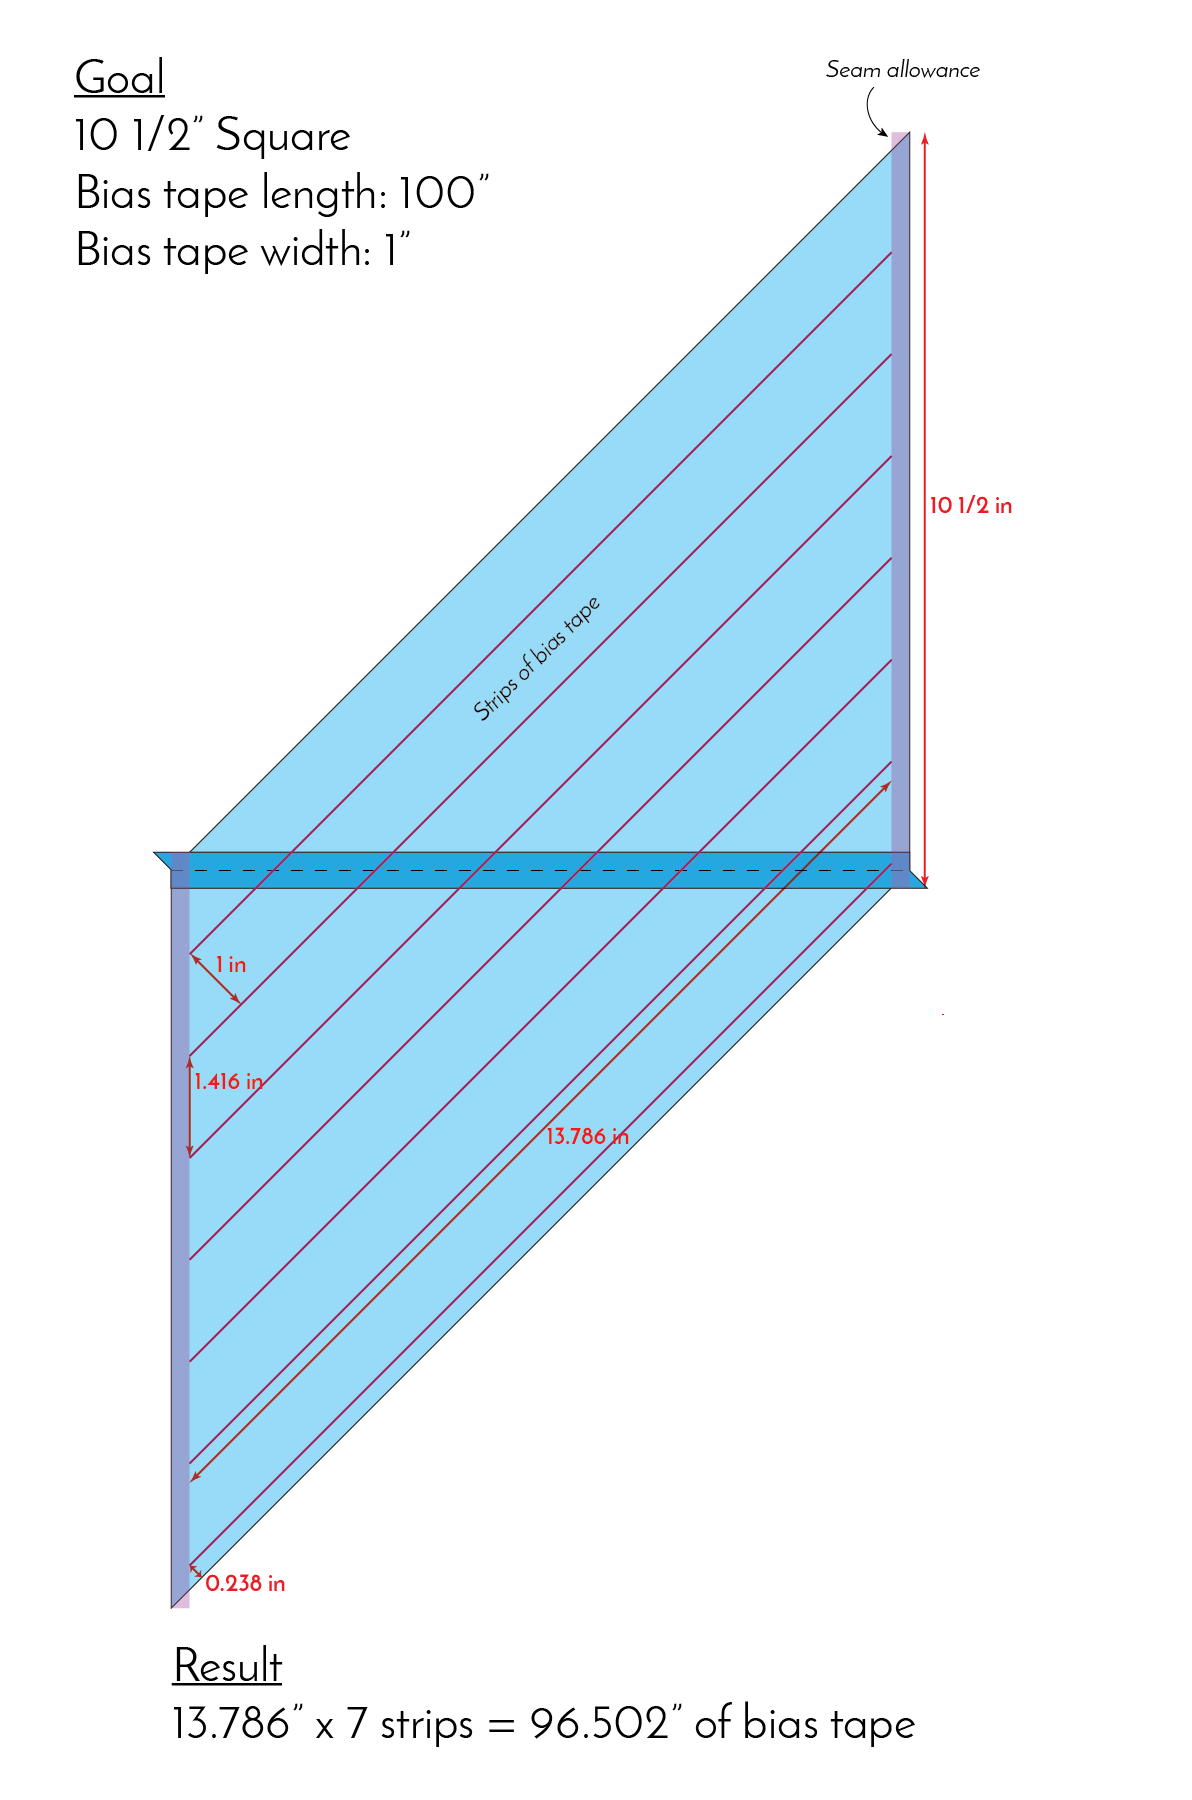 Linear vs Diagonal